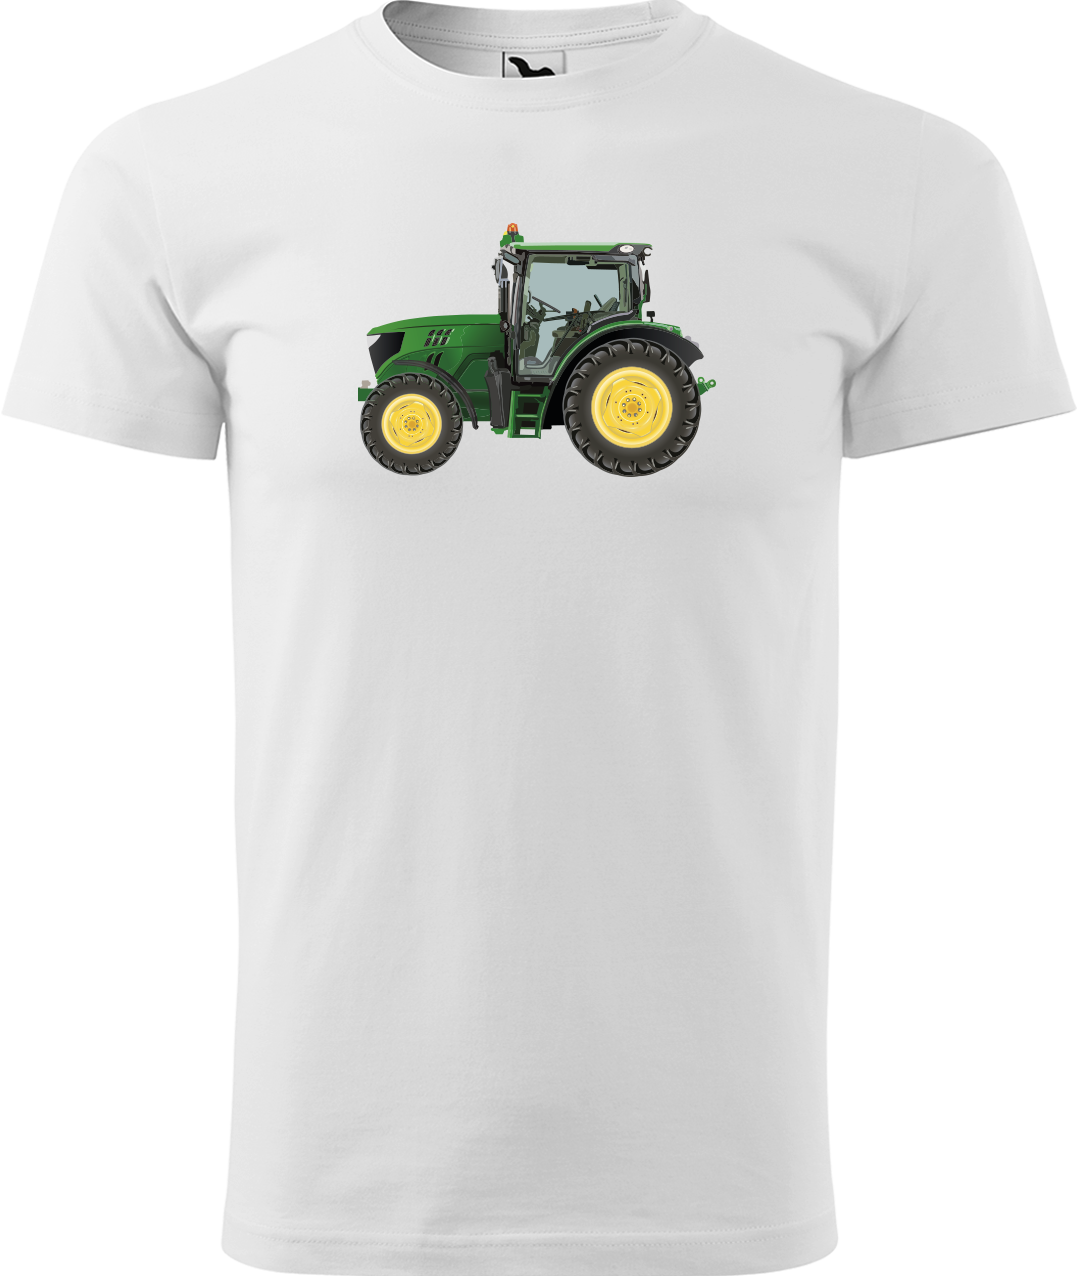 Tričko s traktorem - Zelený traktor Velikost: S, Barva: Bílá (00)